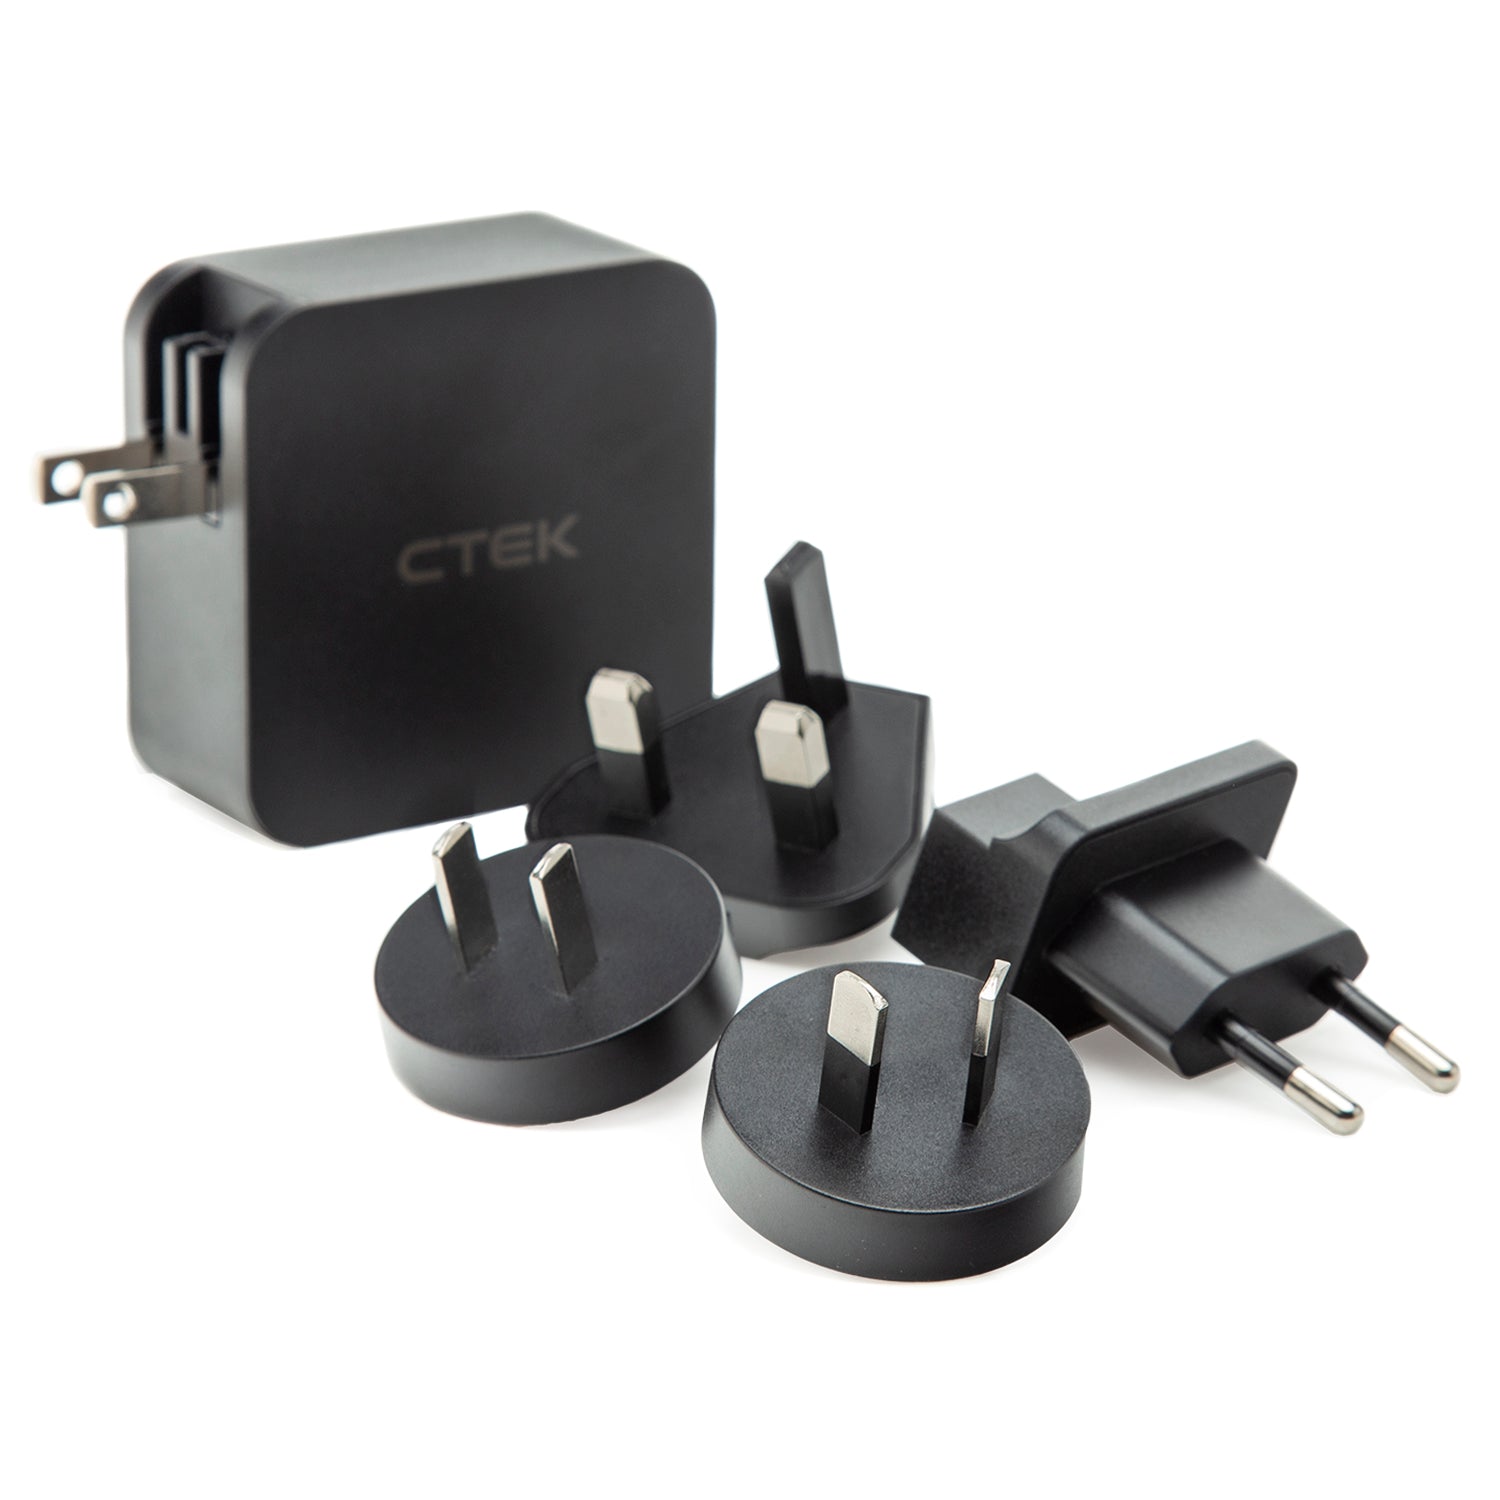 Ctek 40-462 Battery Charger Cs Free 